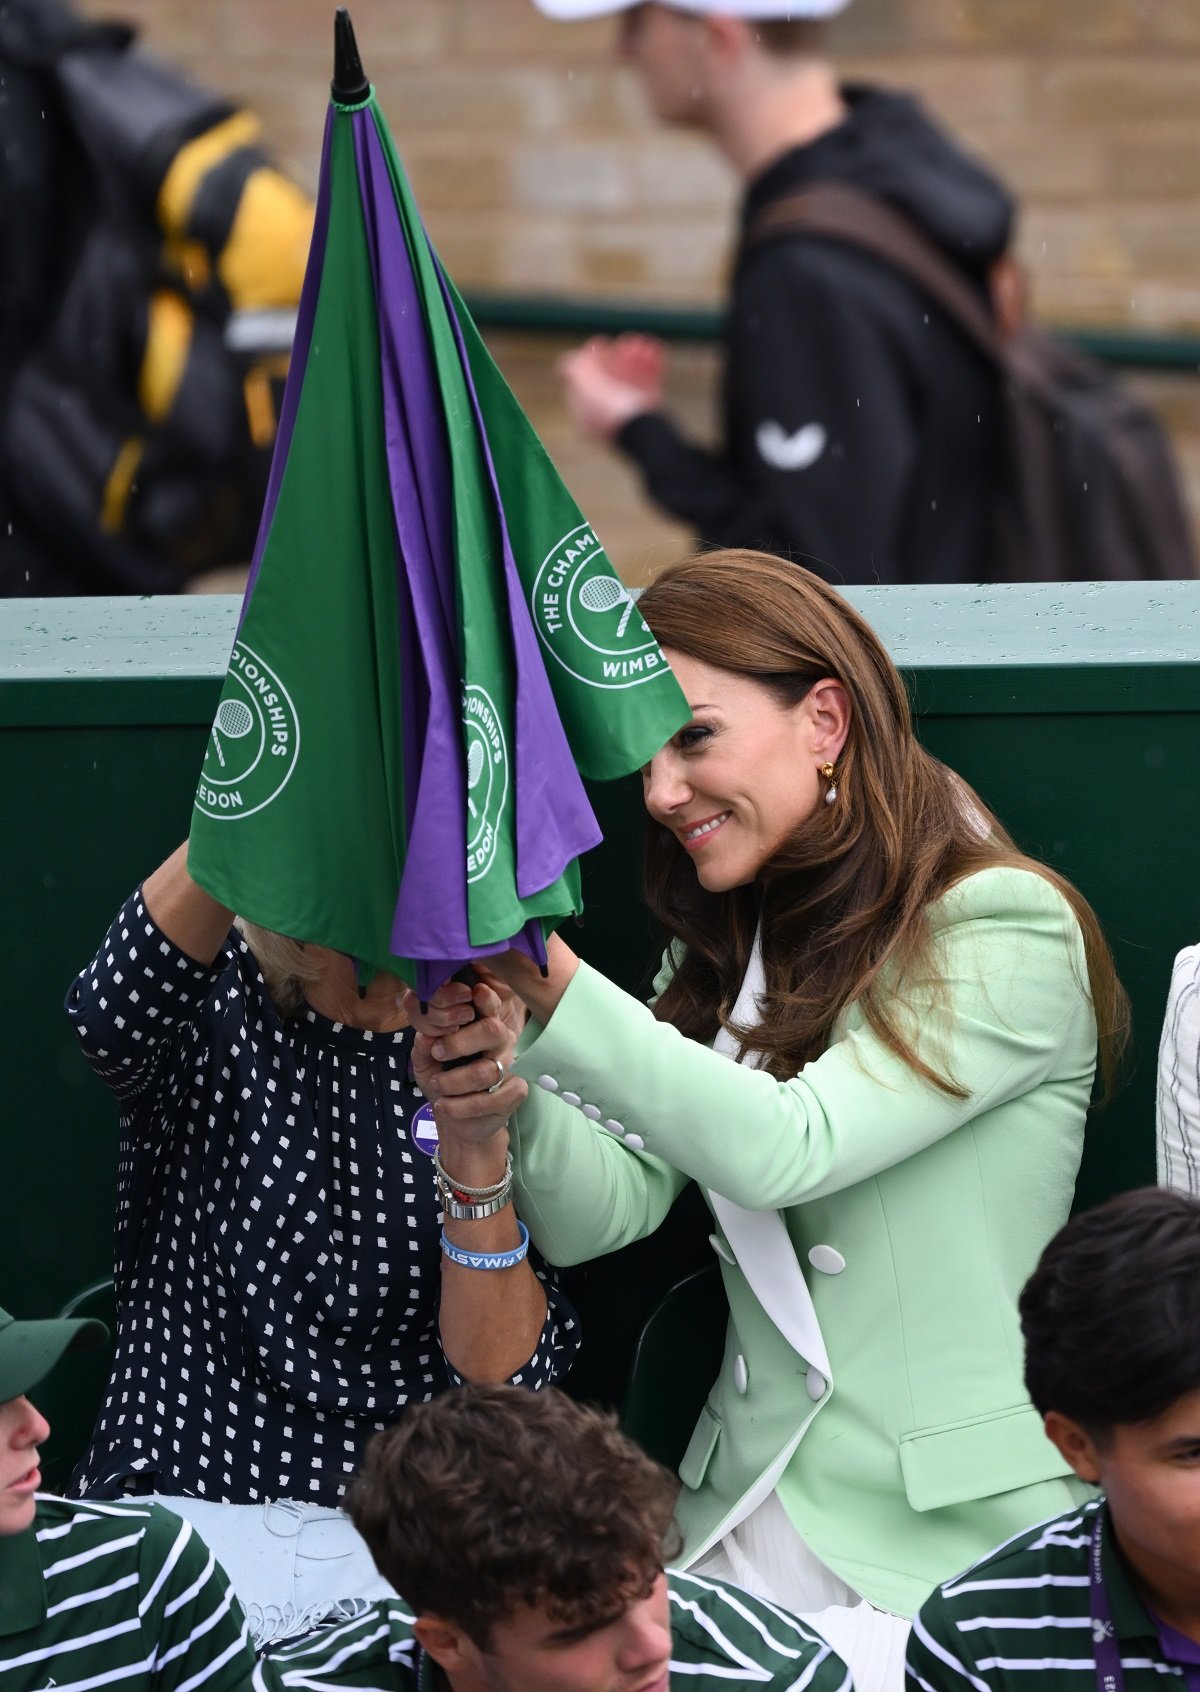 Kate Middleton opening an umbrella as rain stops play at Wimbledon on Day 2